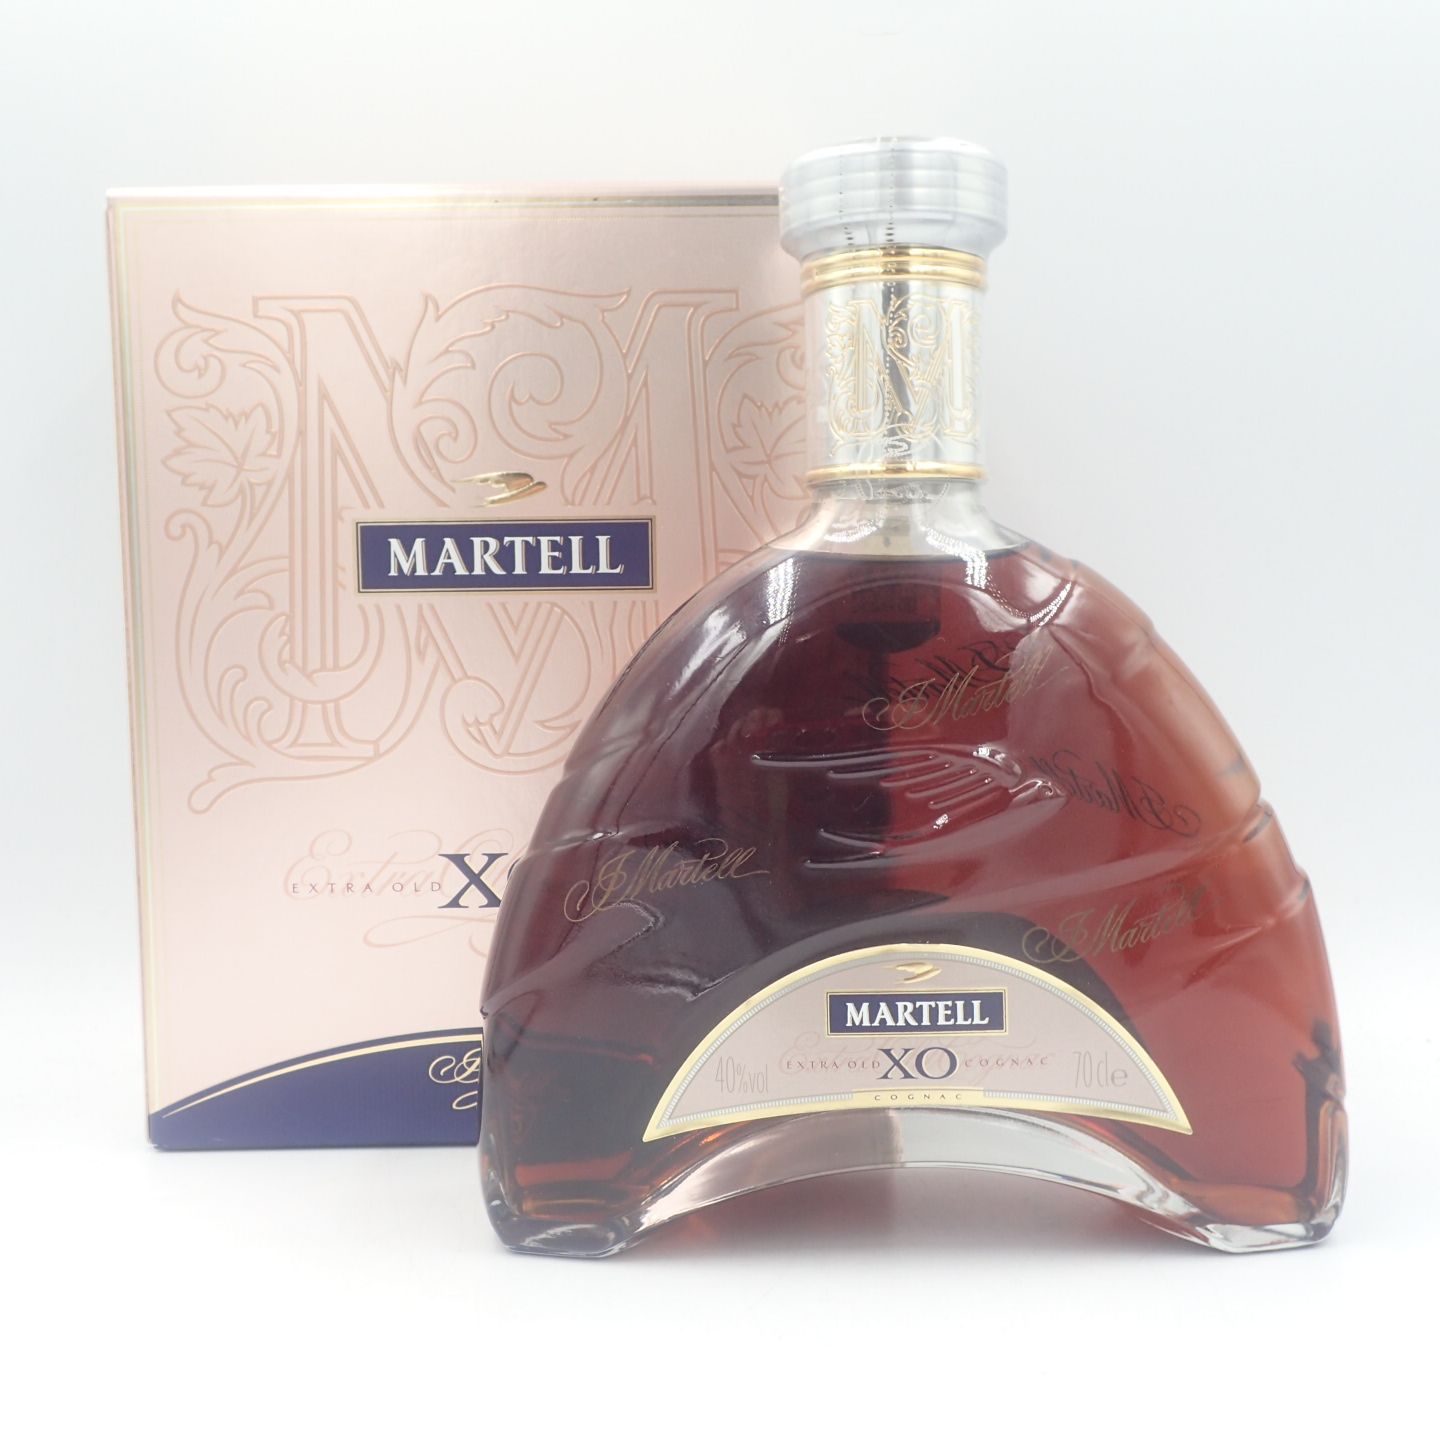 MARTELL マーテル XO EXTRA OLD COGNAC 700ml - 酒